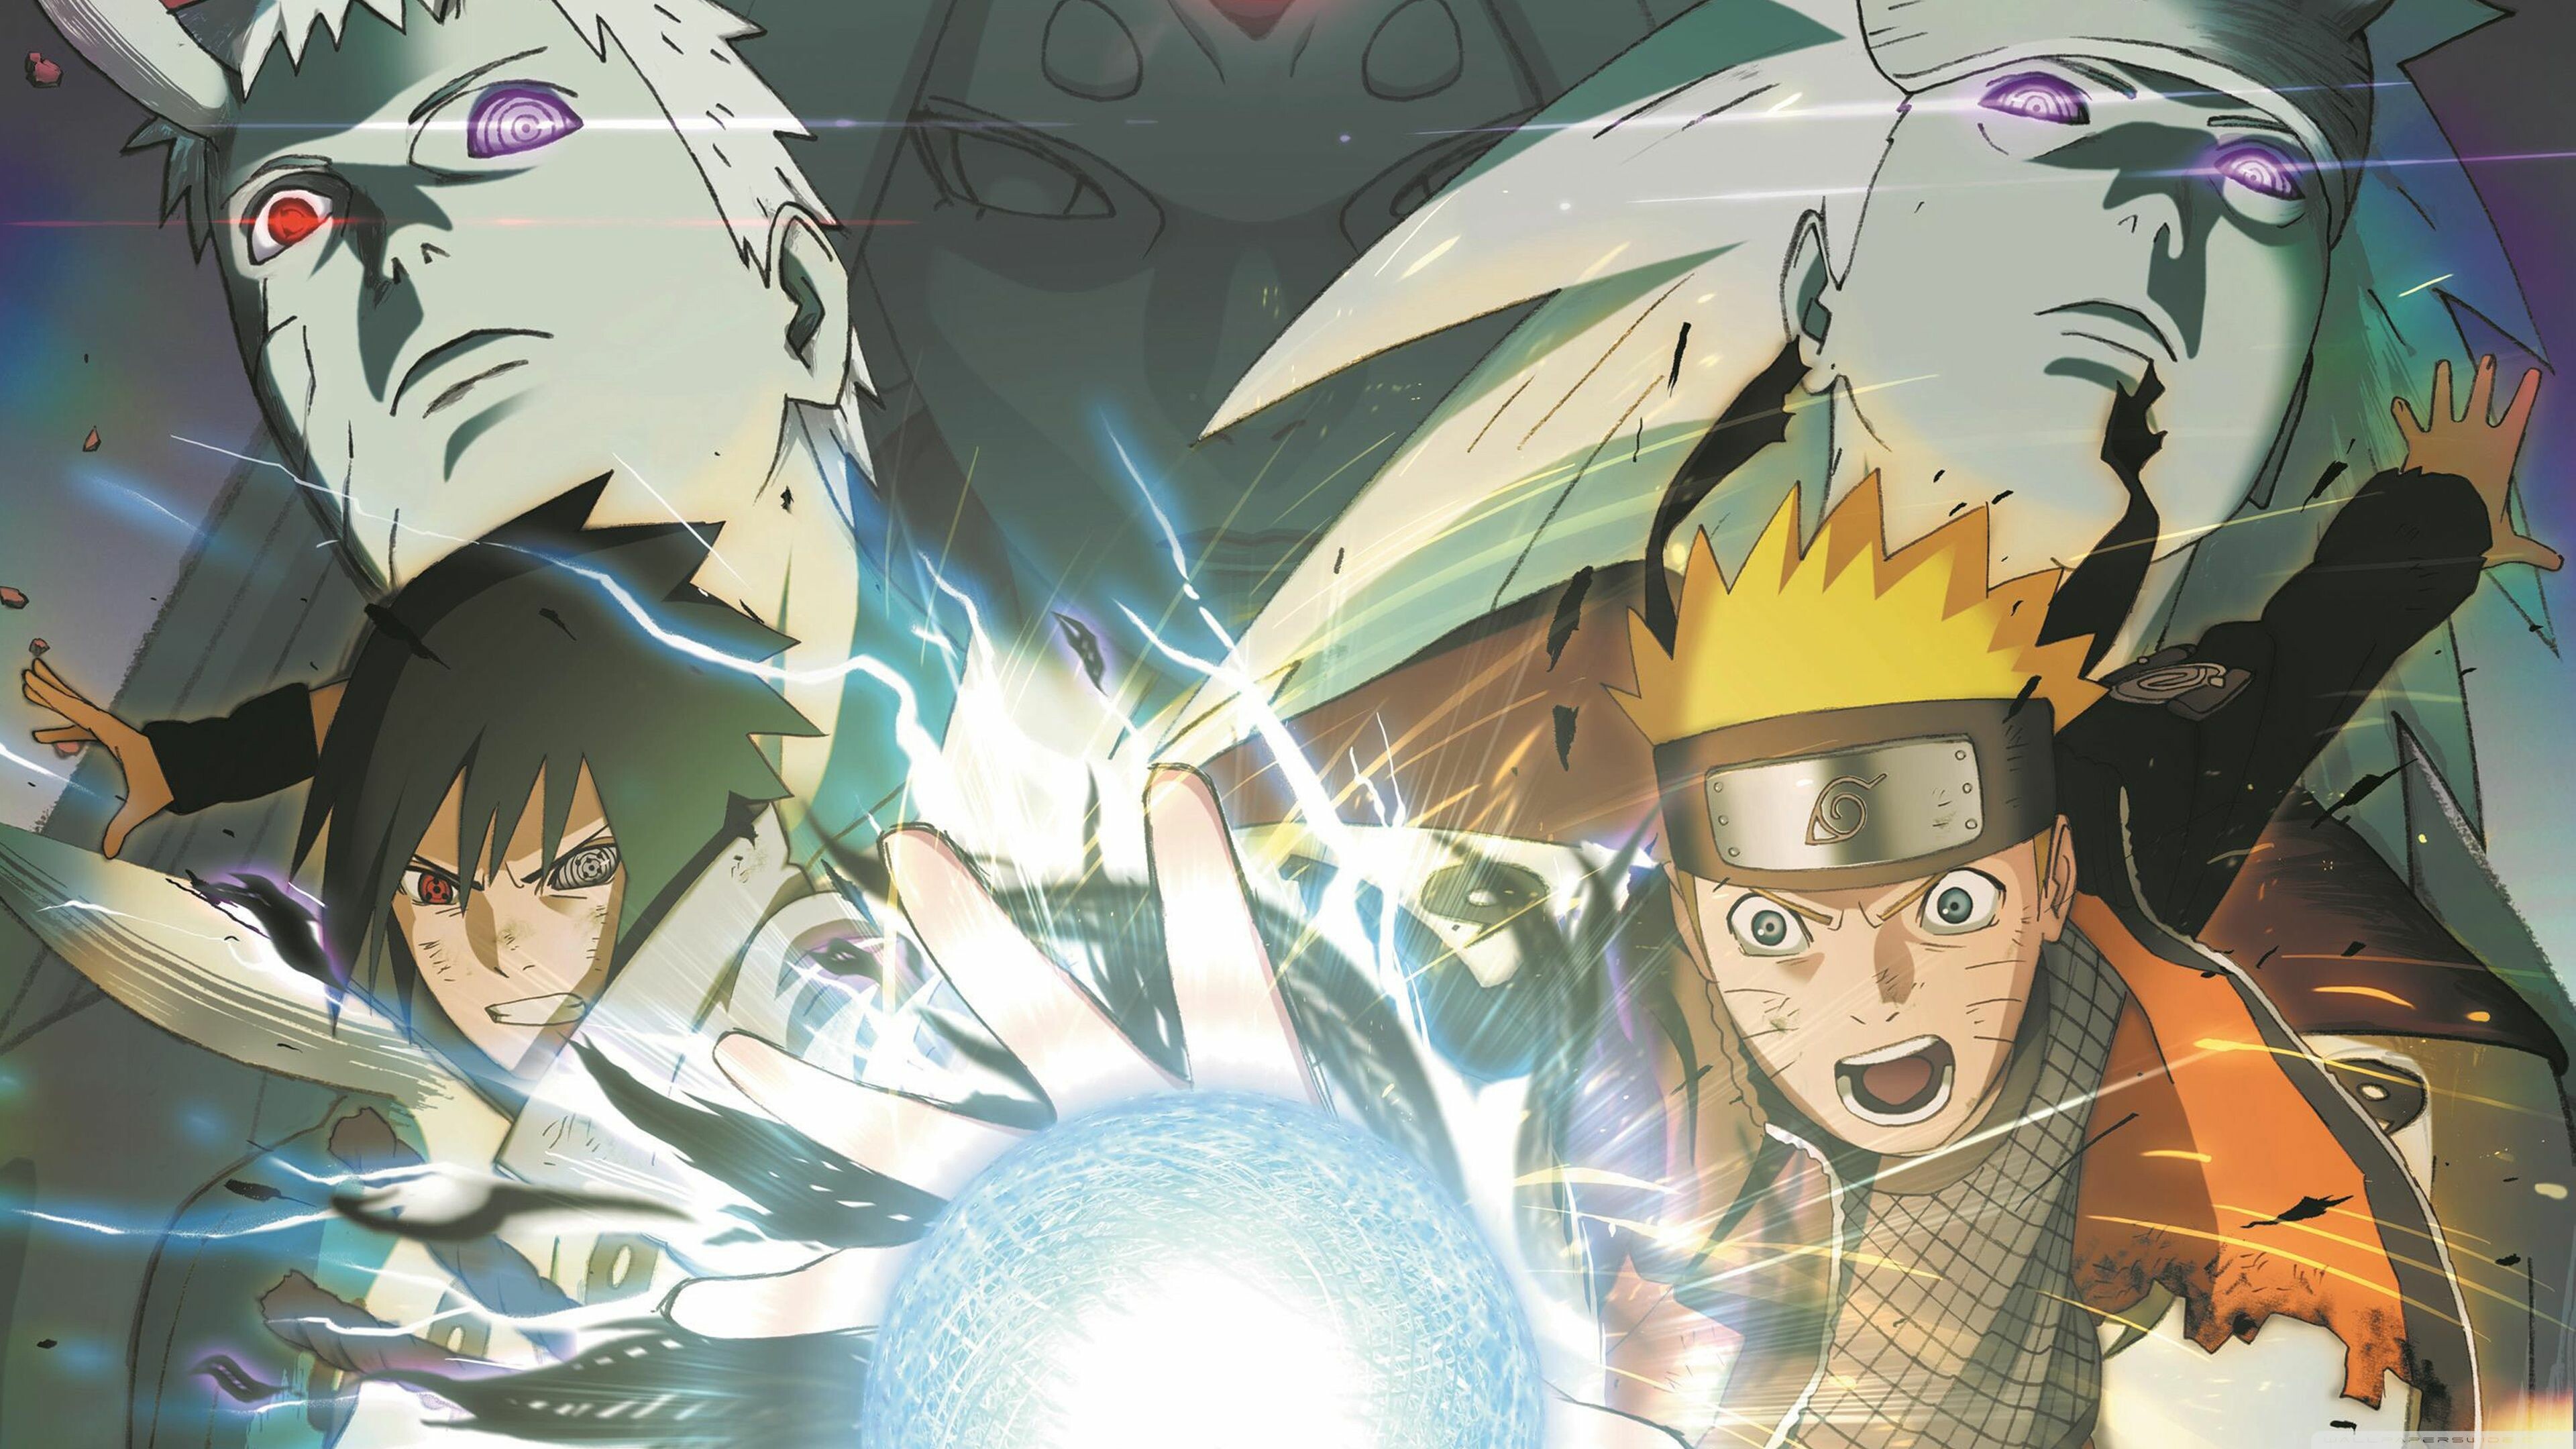 Naruto Team 7 - Anime Posters/8.25" x 12.75"/Naruto Uzumaki/Anime/Fortnite/Board  | eBay